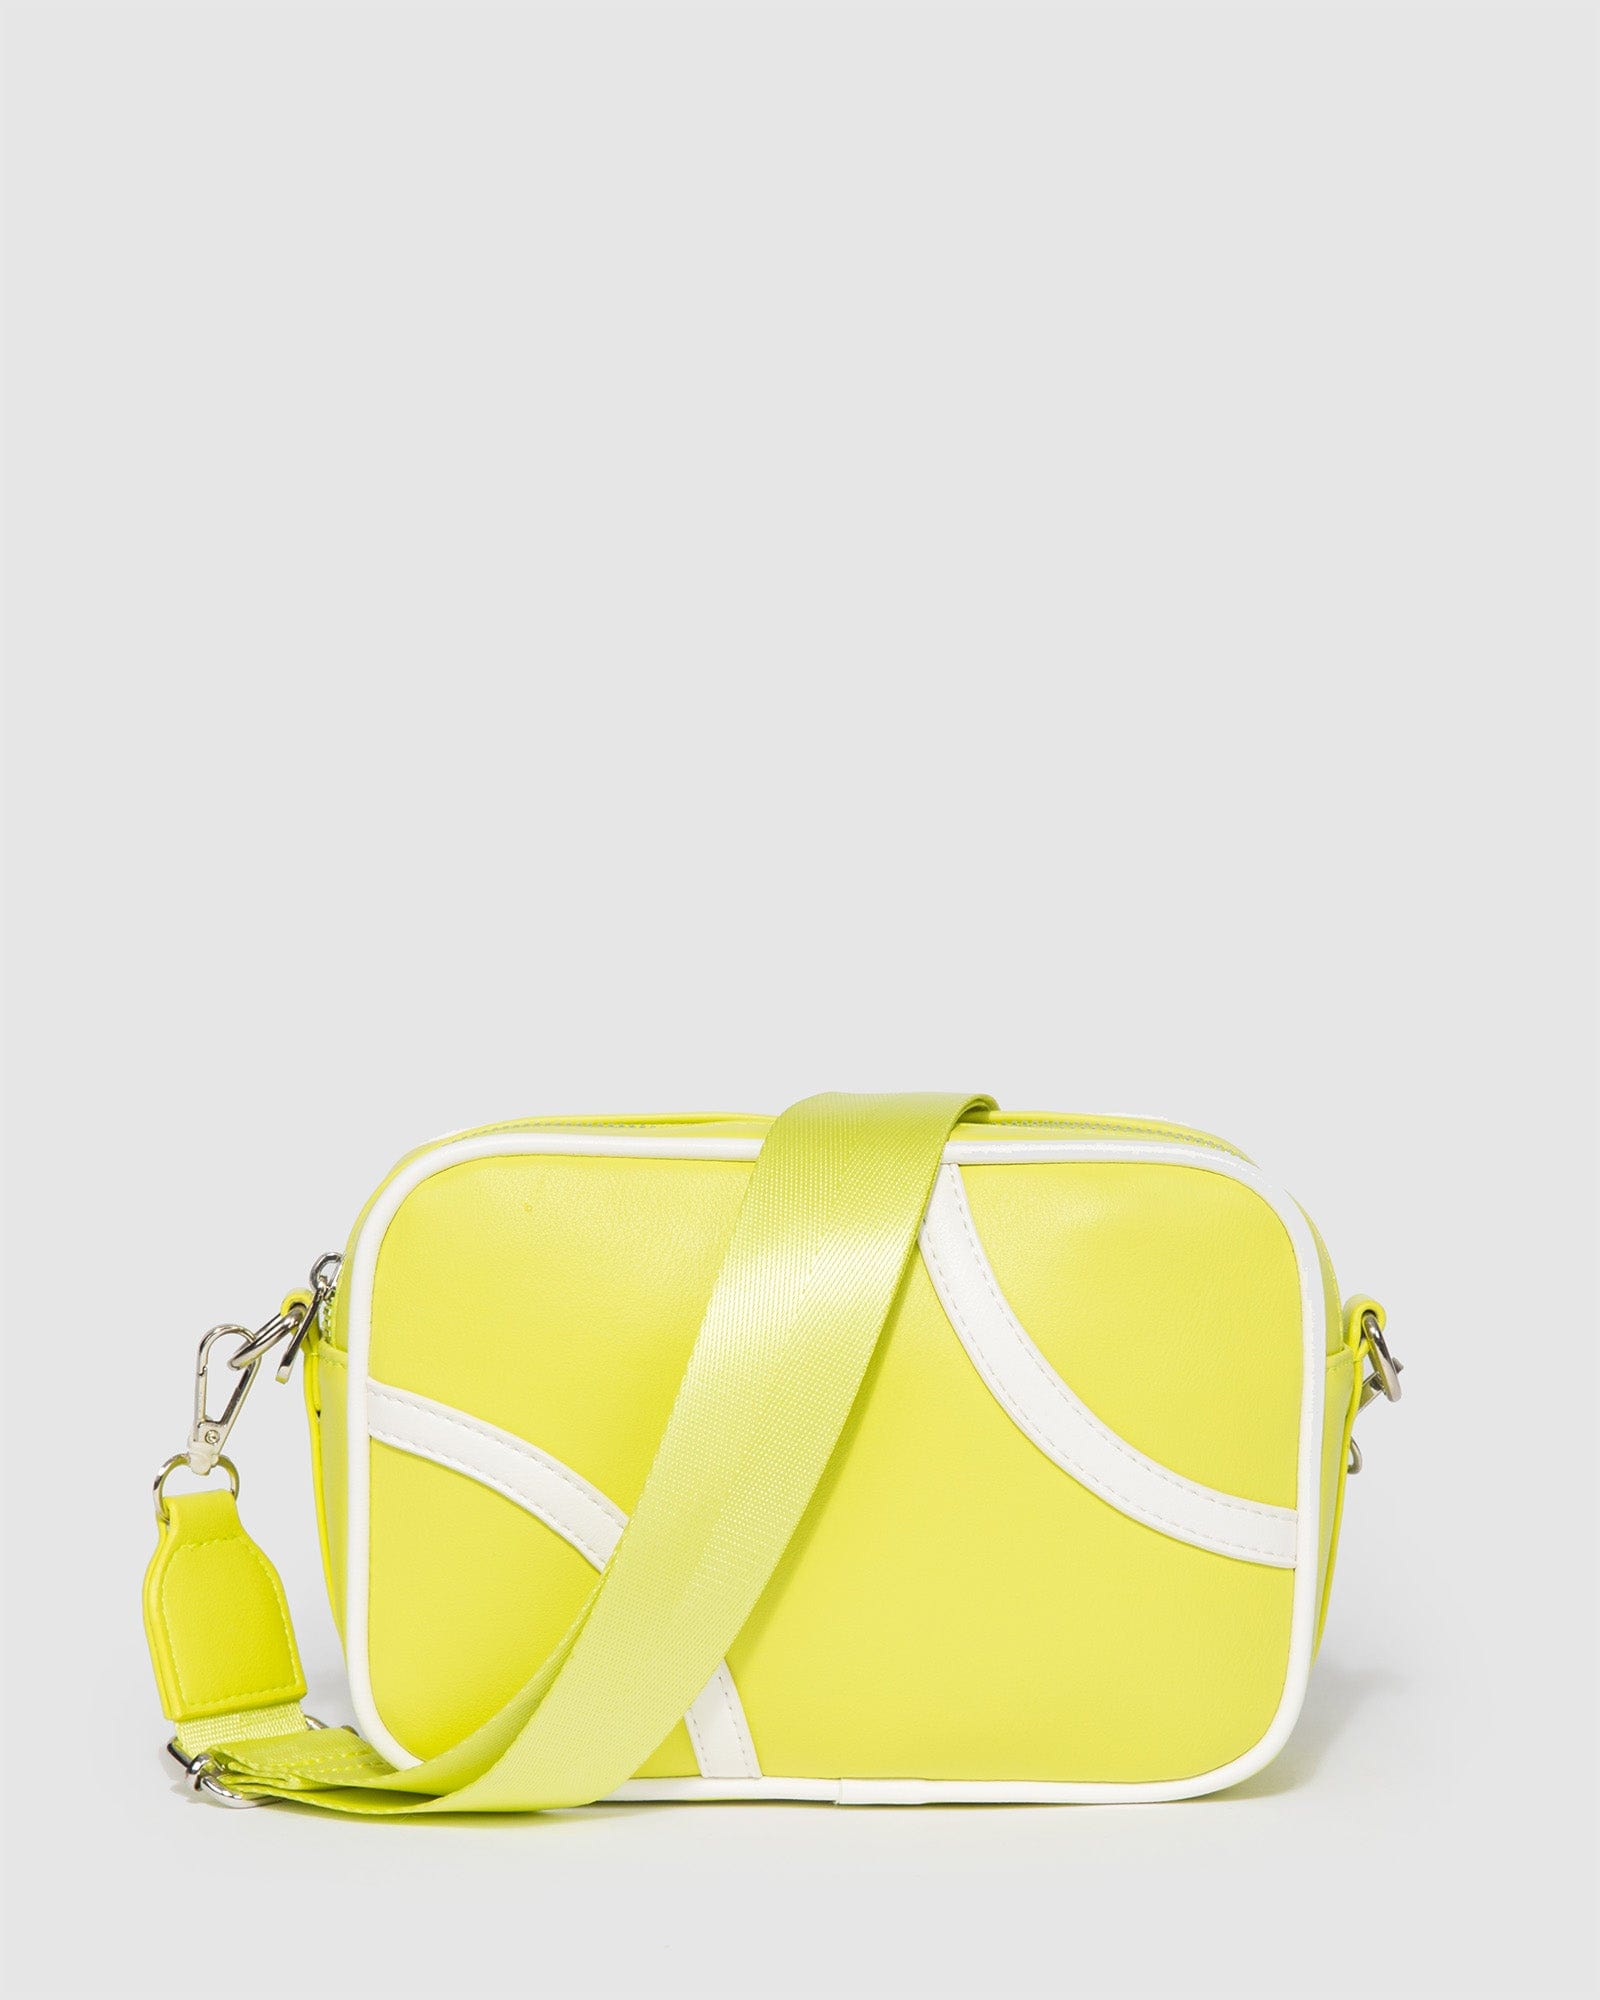 Handbags | Women's Handbags & Tote Bags Online & Instore – Tagged 